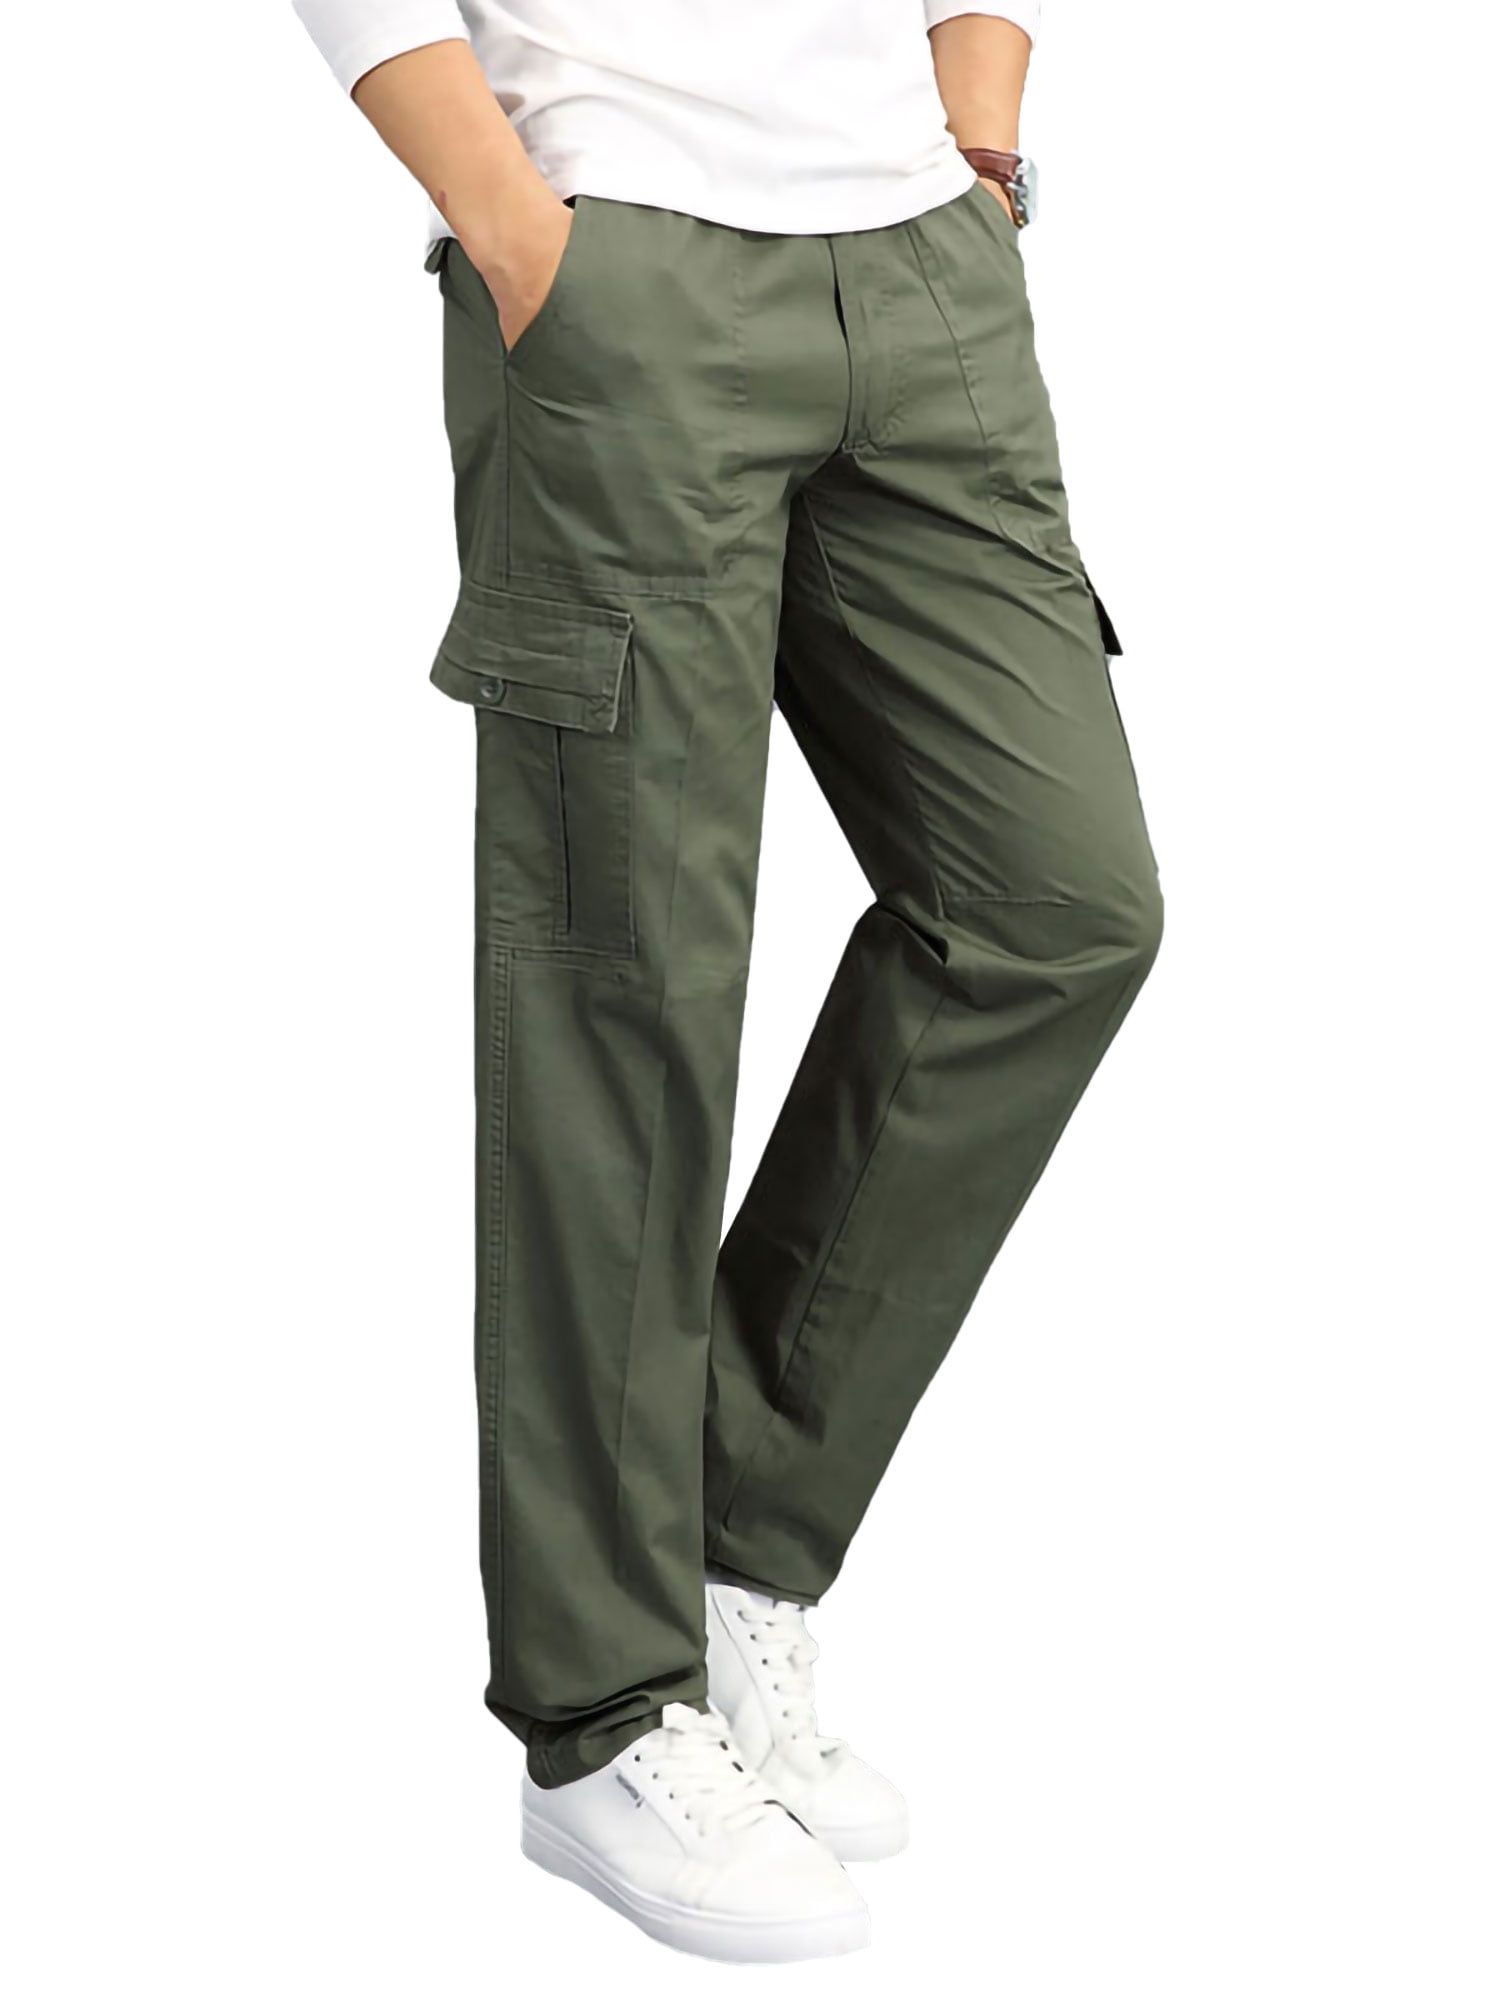 Pants Workout Military Sweatpants men's Trouseres Hiking Combat Workwear Canvas